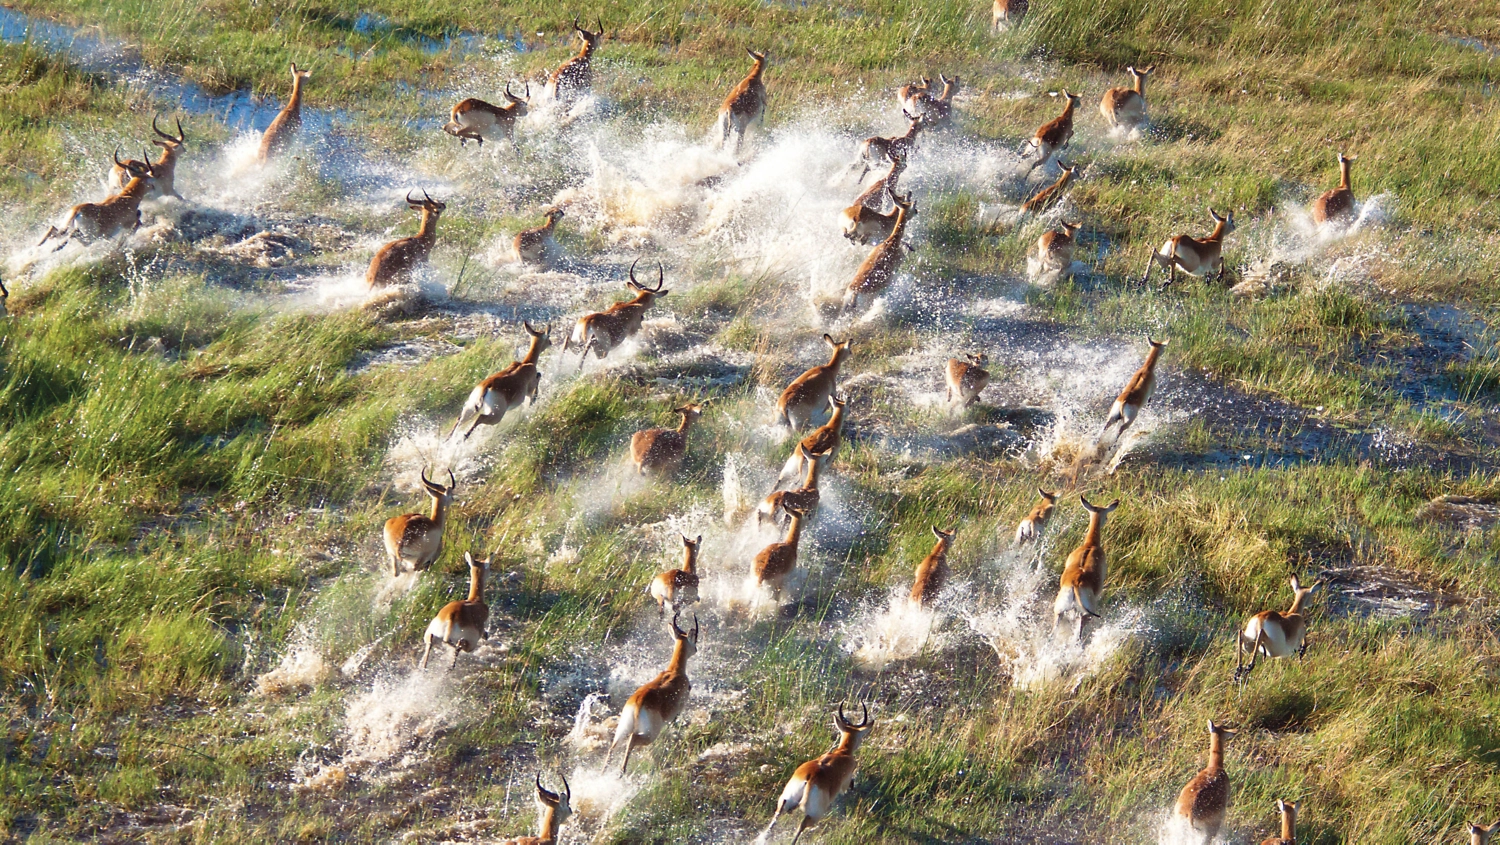 A herd of gazelle run through water and tall grass on safari - Zimbabwe, Zambia, Botswana OAT Overseas Adventure Travel